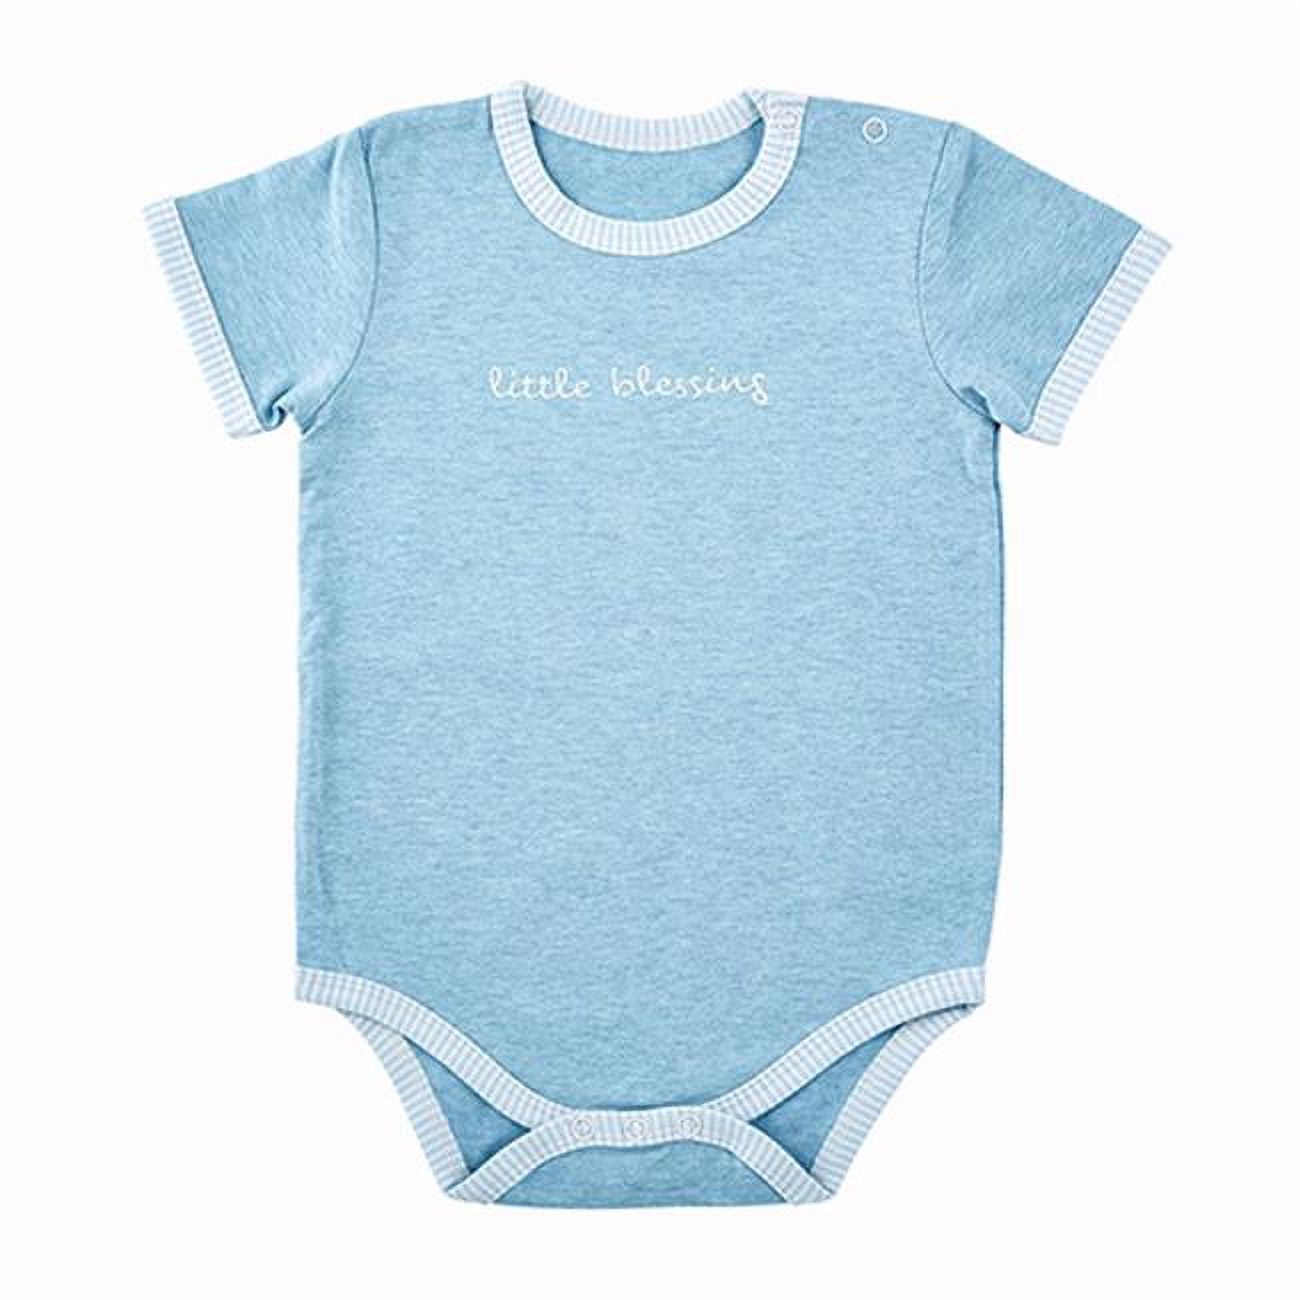 137186 Little Blessing Baby Snapshirt, Cream & Blue - 0-3 Months